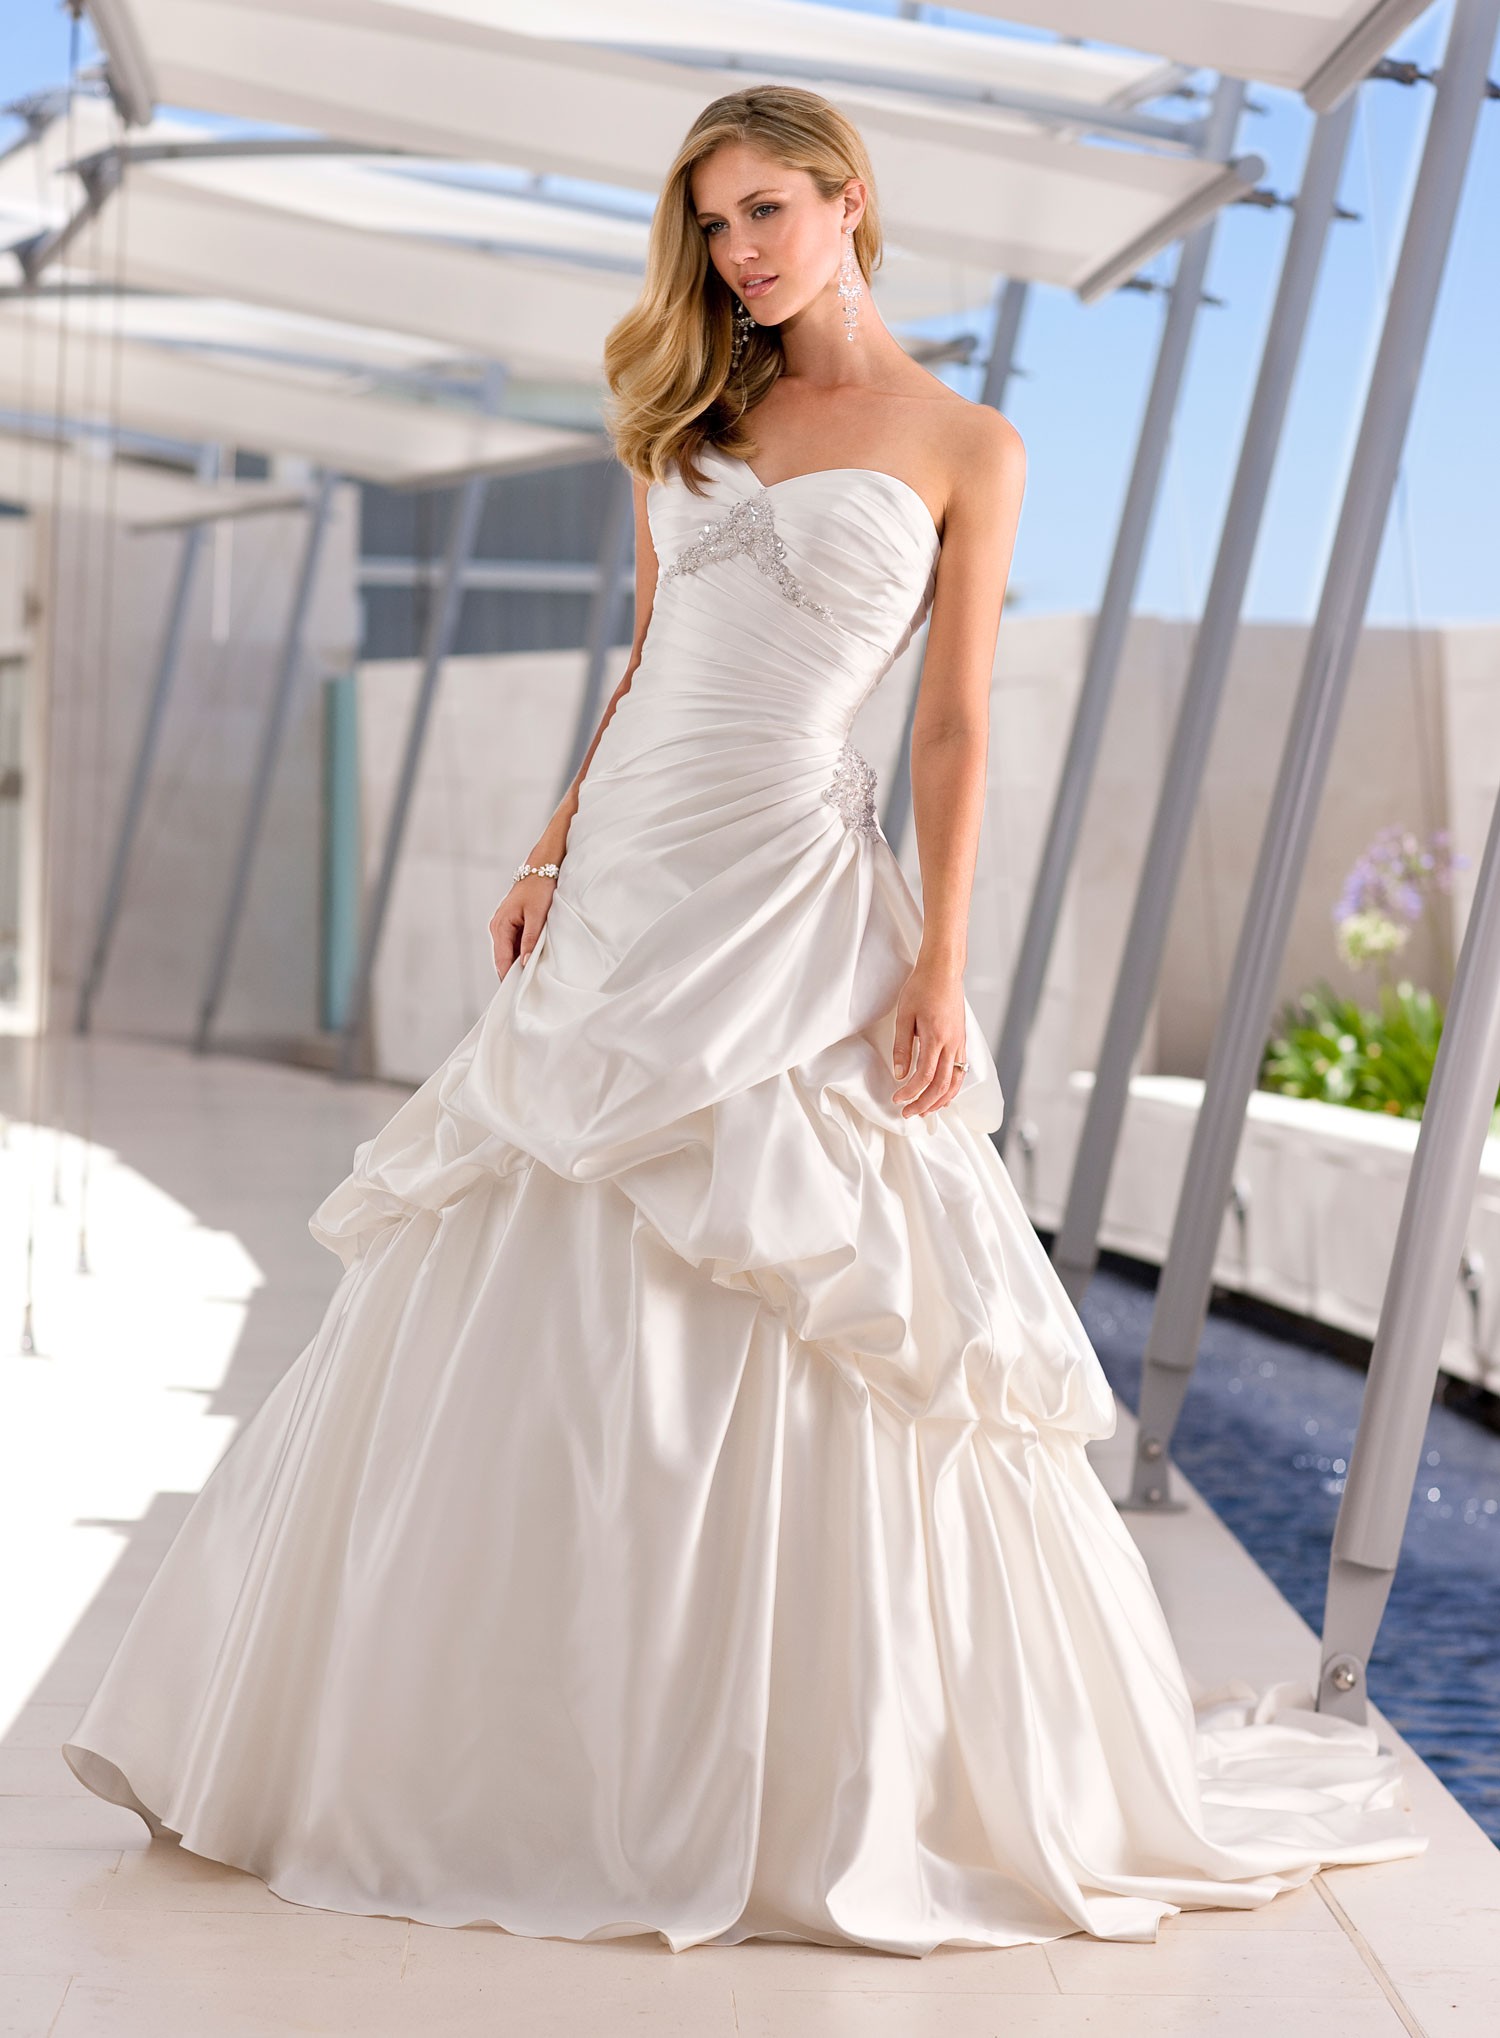 Feel Classy In Cheap Wedding Dresses - Ohh My My